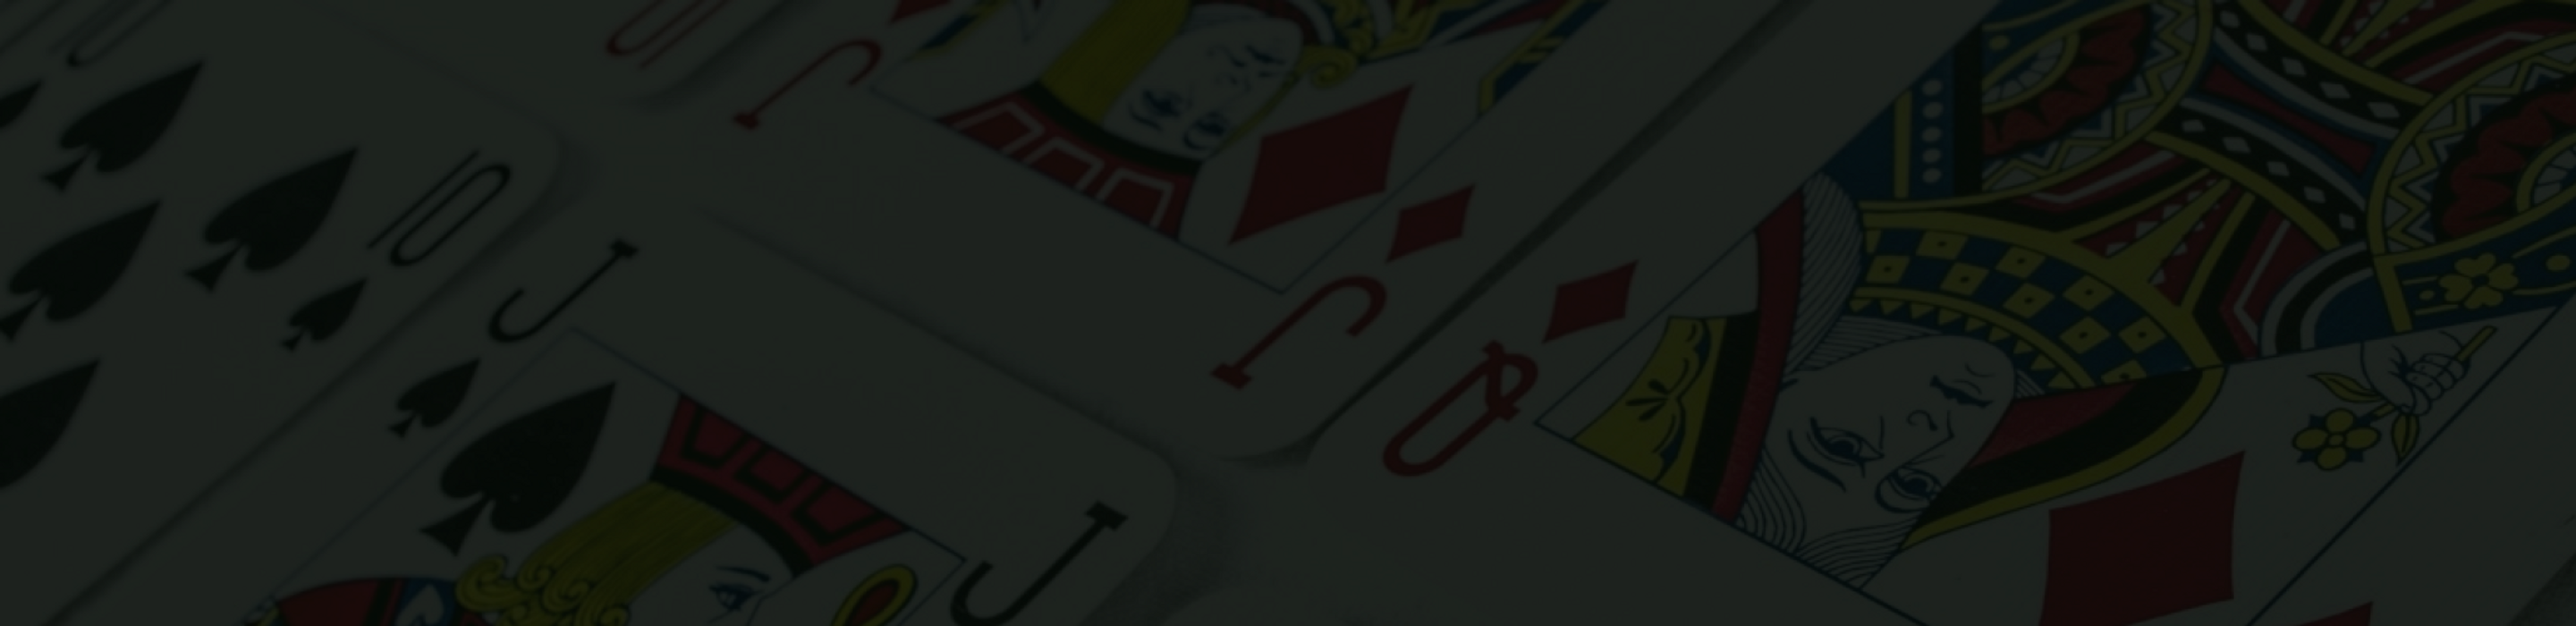 Legal Online Casinos & Online Gambling Banner